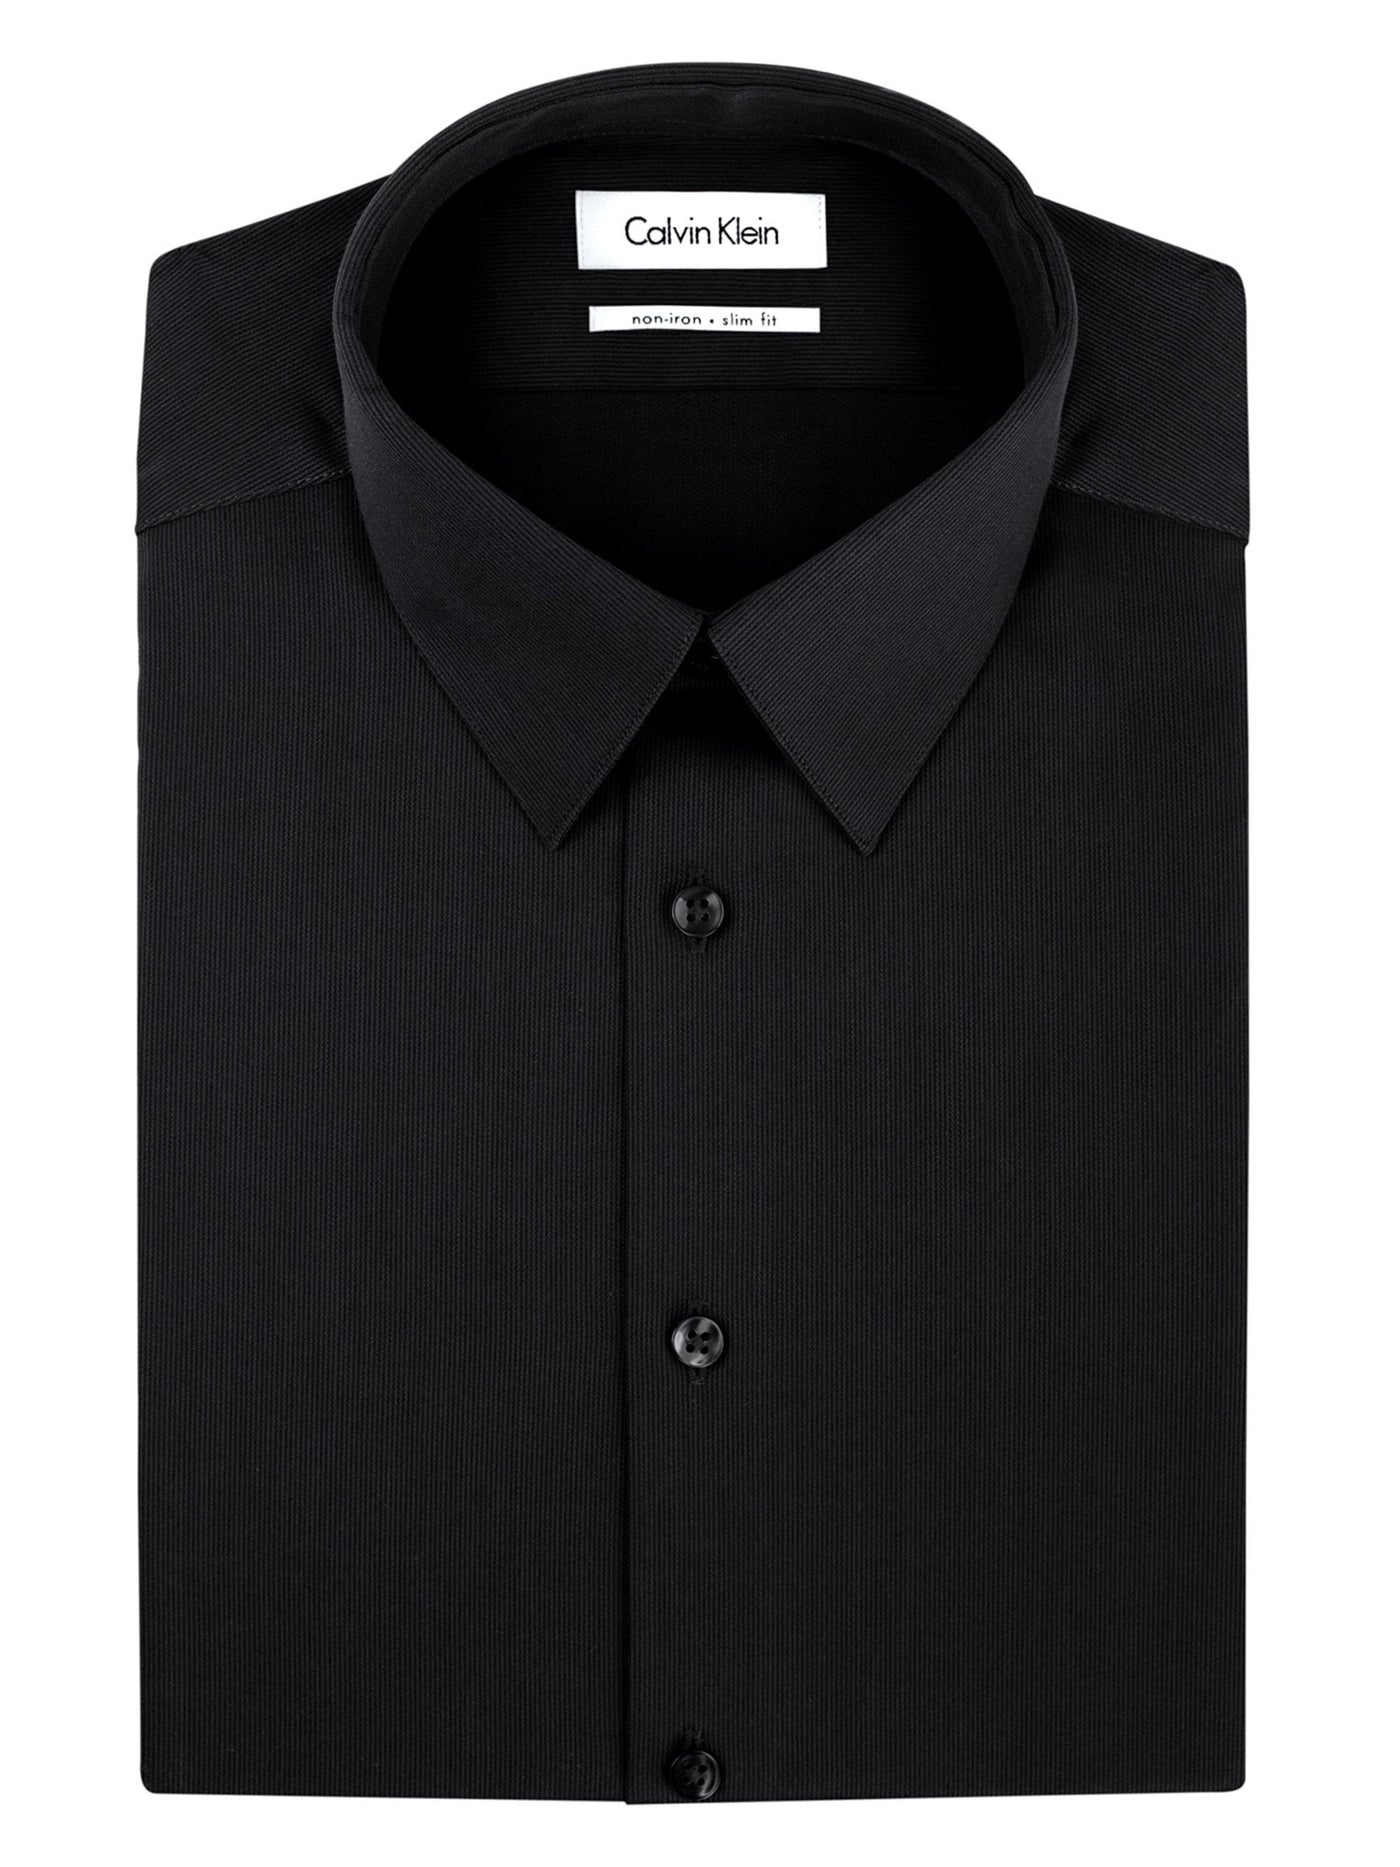 CALVIN KLEIN Mens Black Spread Collar Slim Fit Button Down Shirt 16.5- 34/35